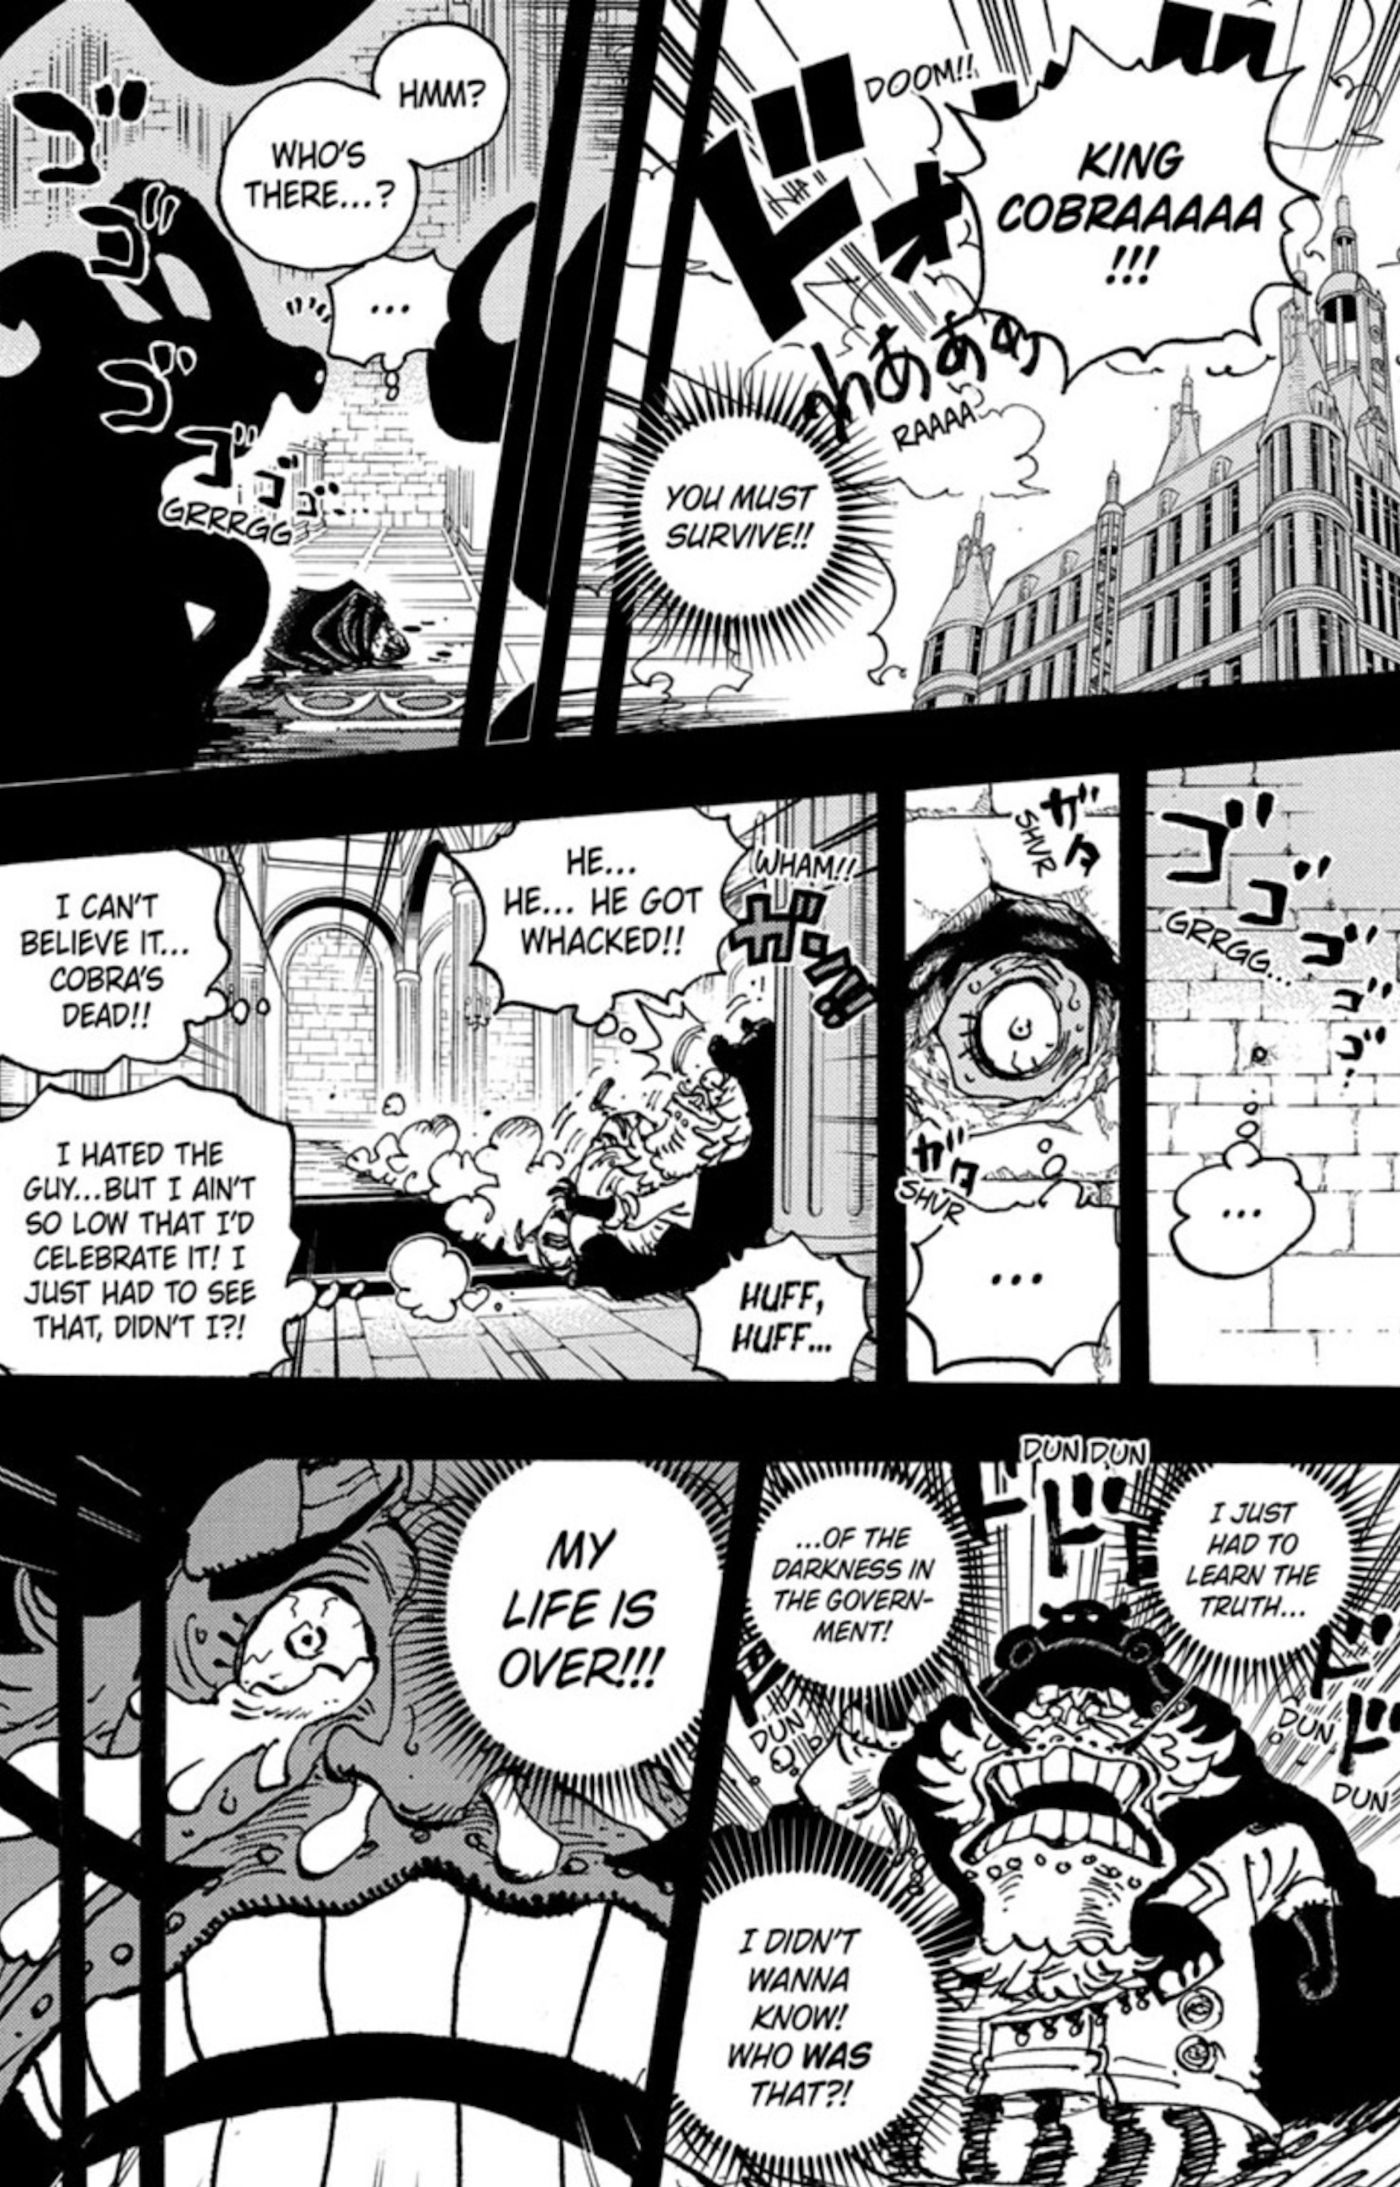 Panel manga dari One Piece chapter 1085 menunjukkan Raja Wapol melihat pembunuhan Cobra oleh 5 Sesepuh di ruang singgasana Imu melalui lubang kecil acak di dinding.